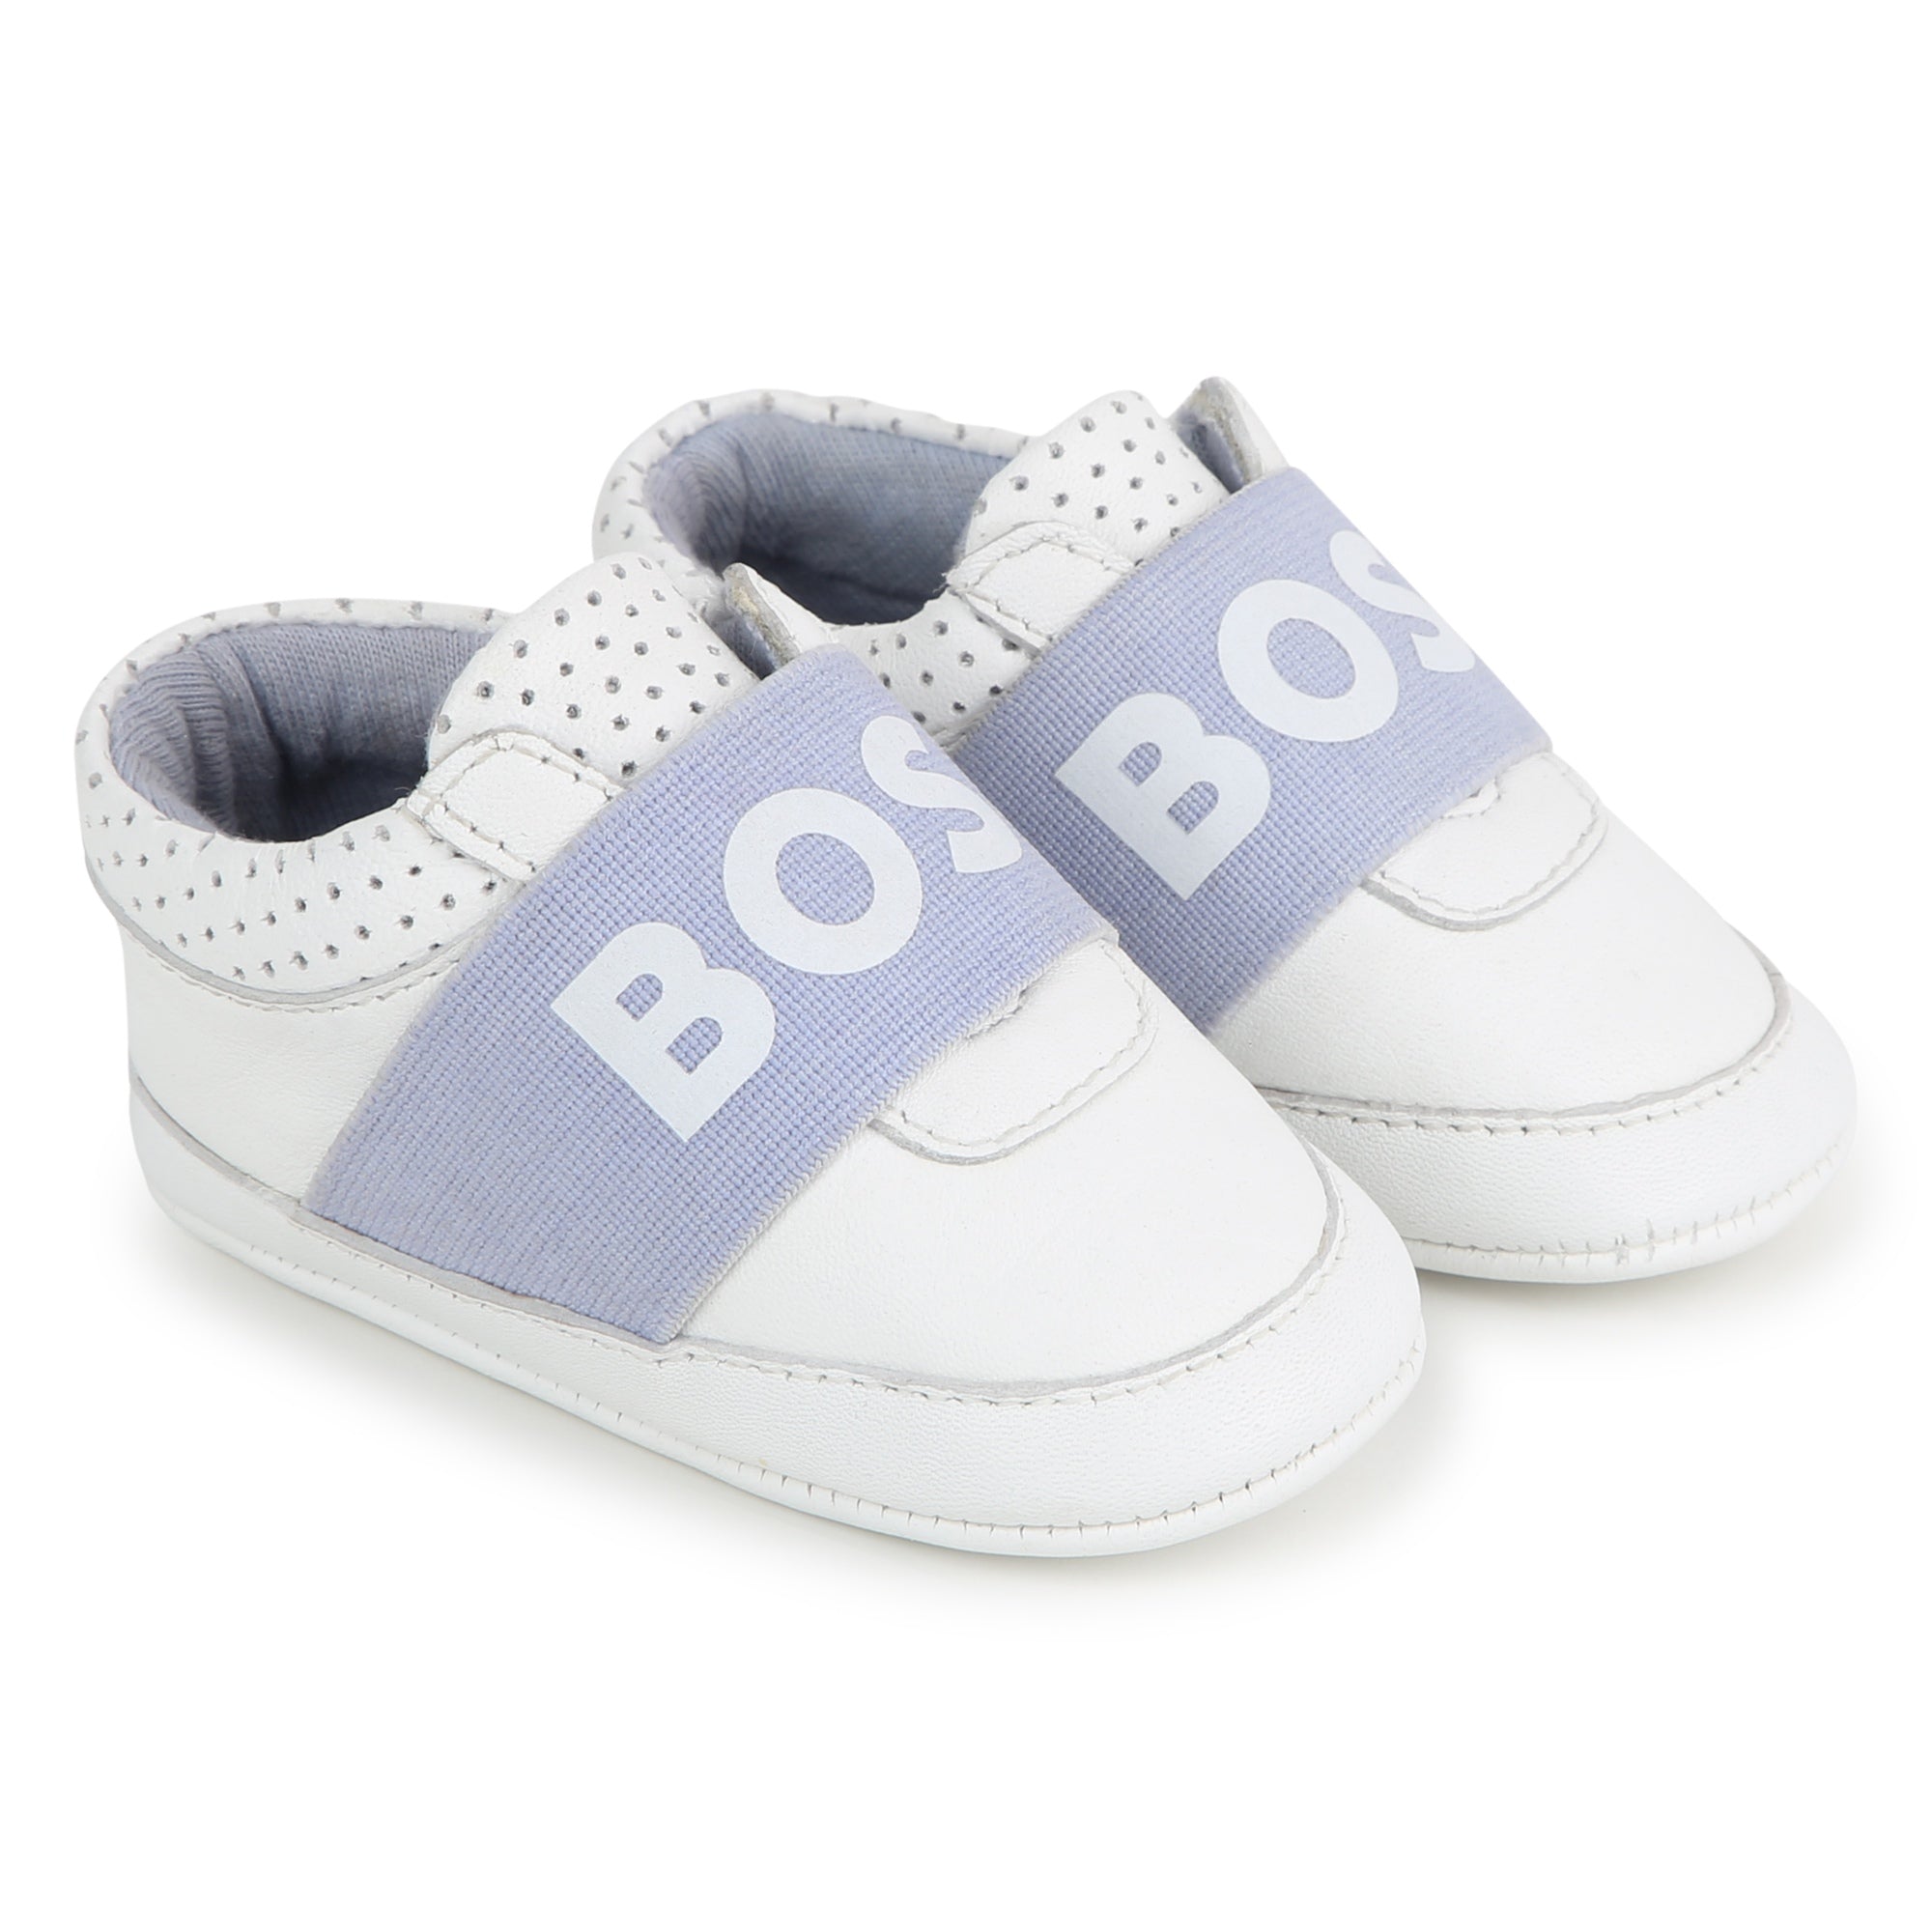 Hugo Boss Baby Boys Soft Shoes